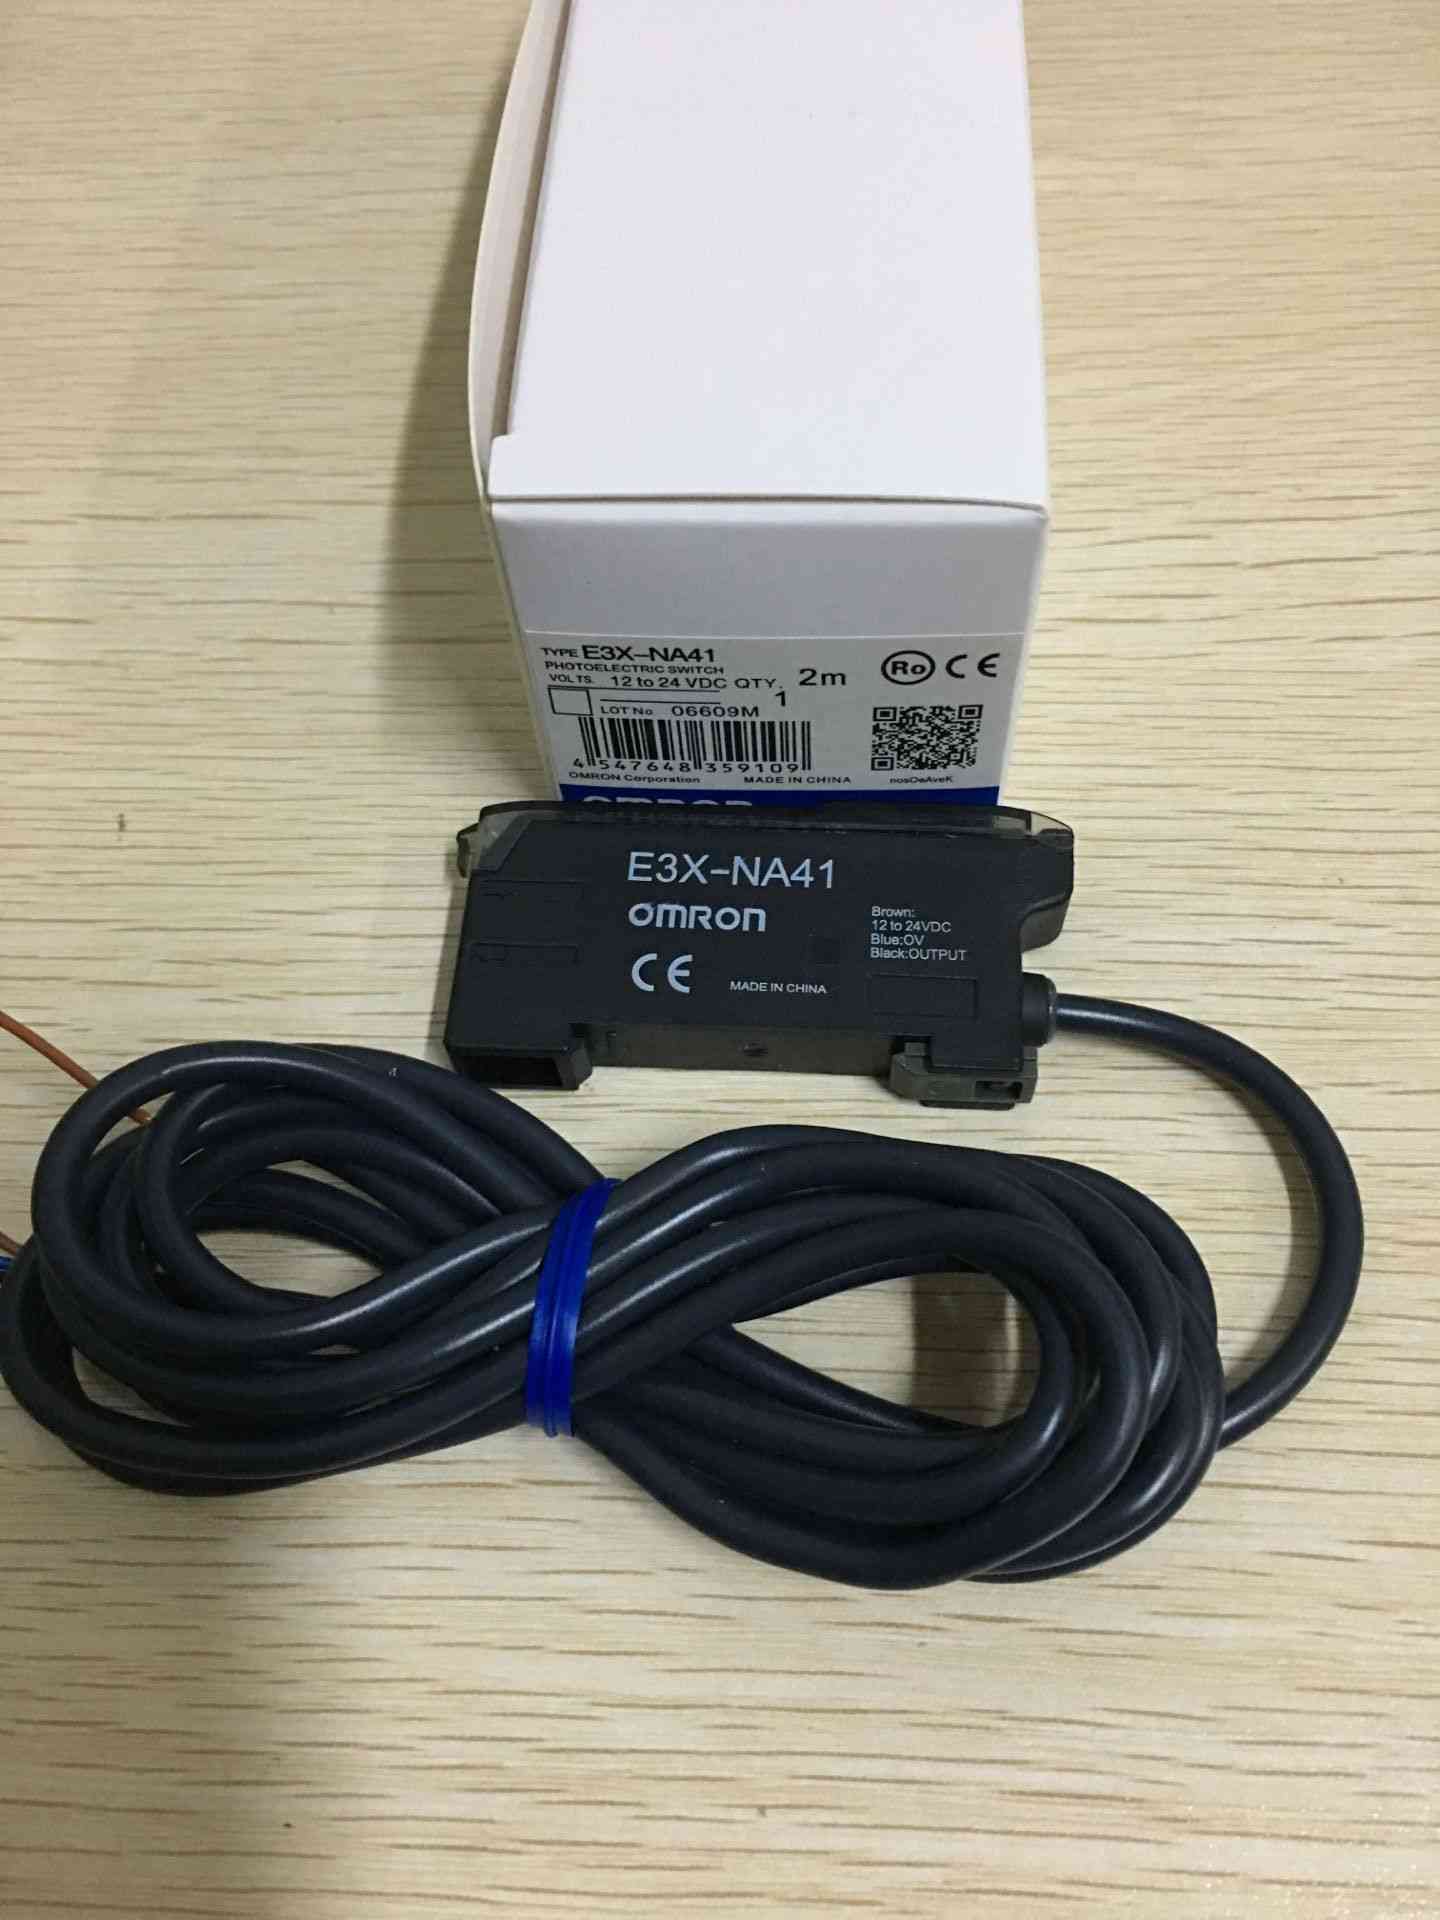 E3x-na41 Sensor Photoamp Fiber 2m Cbl